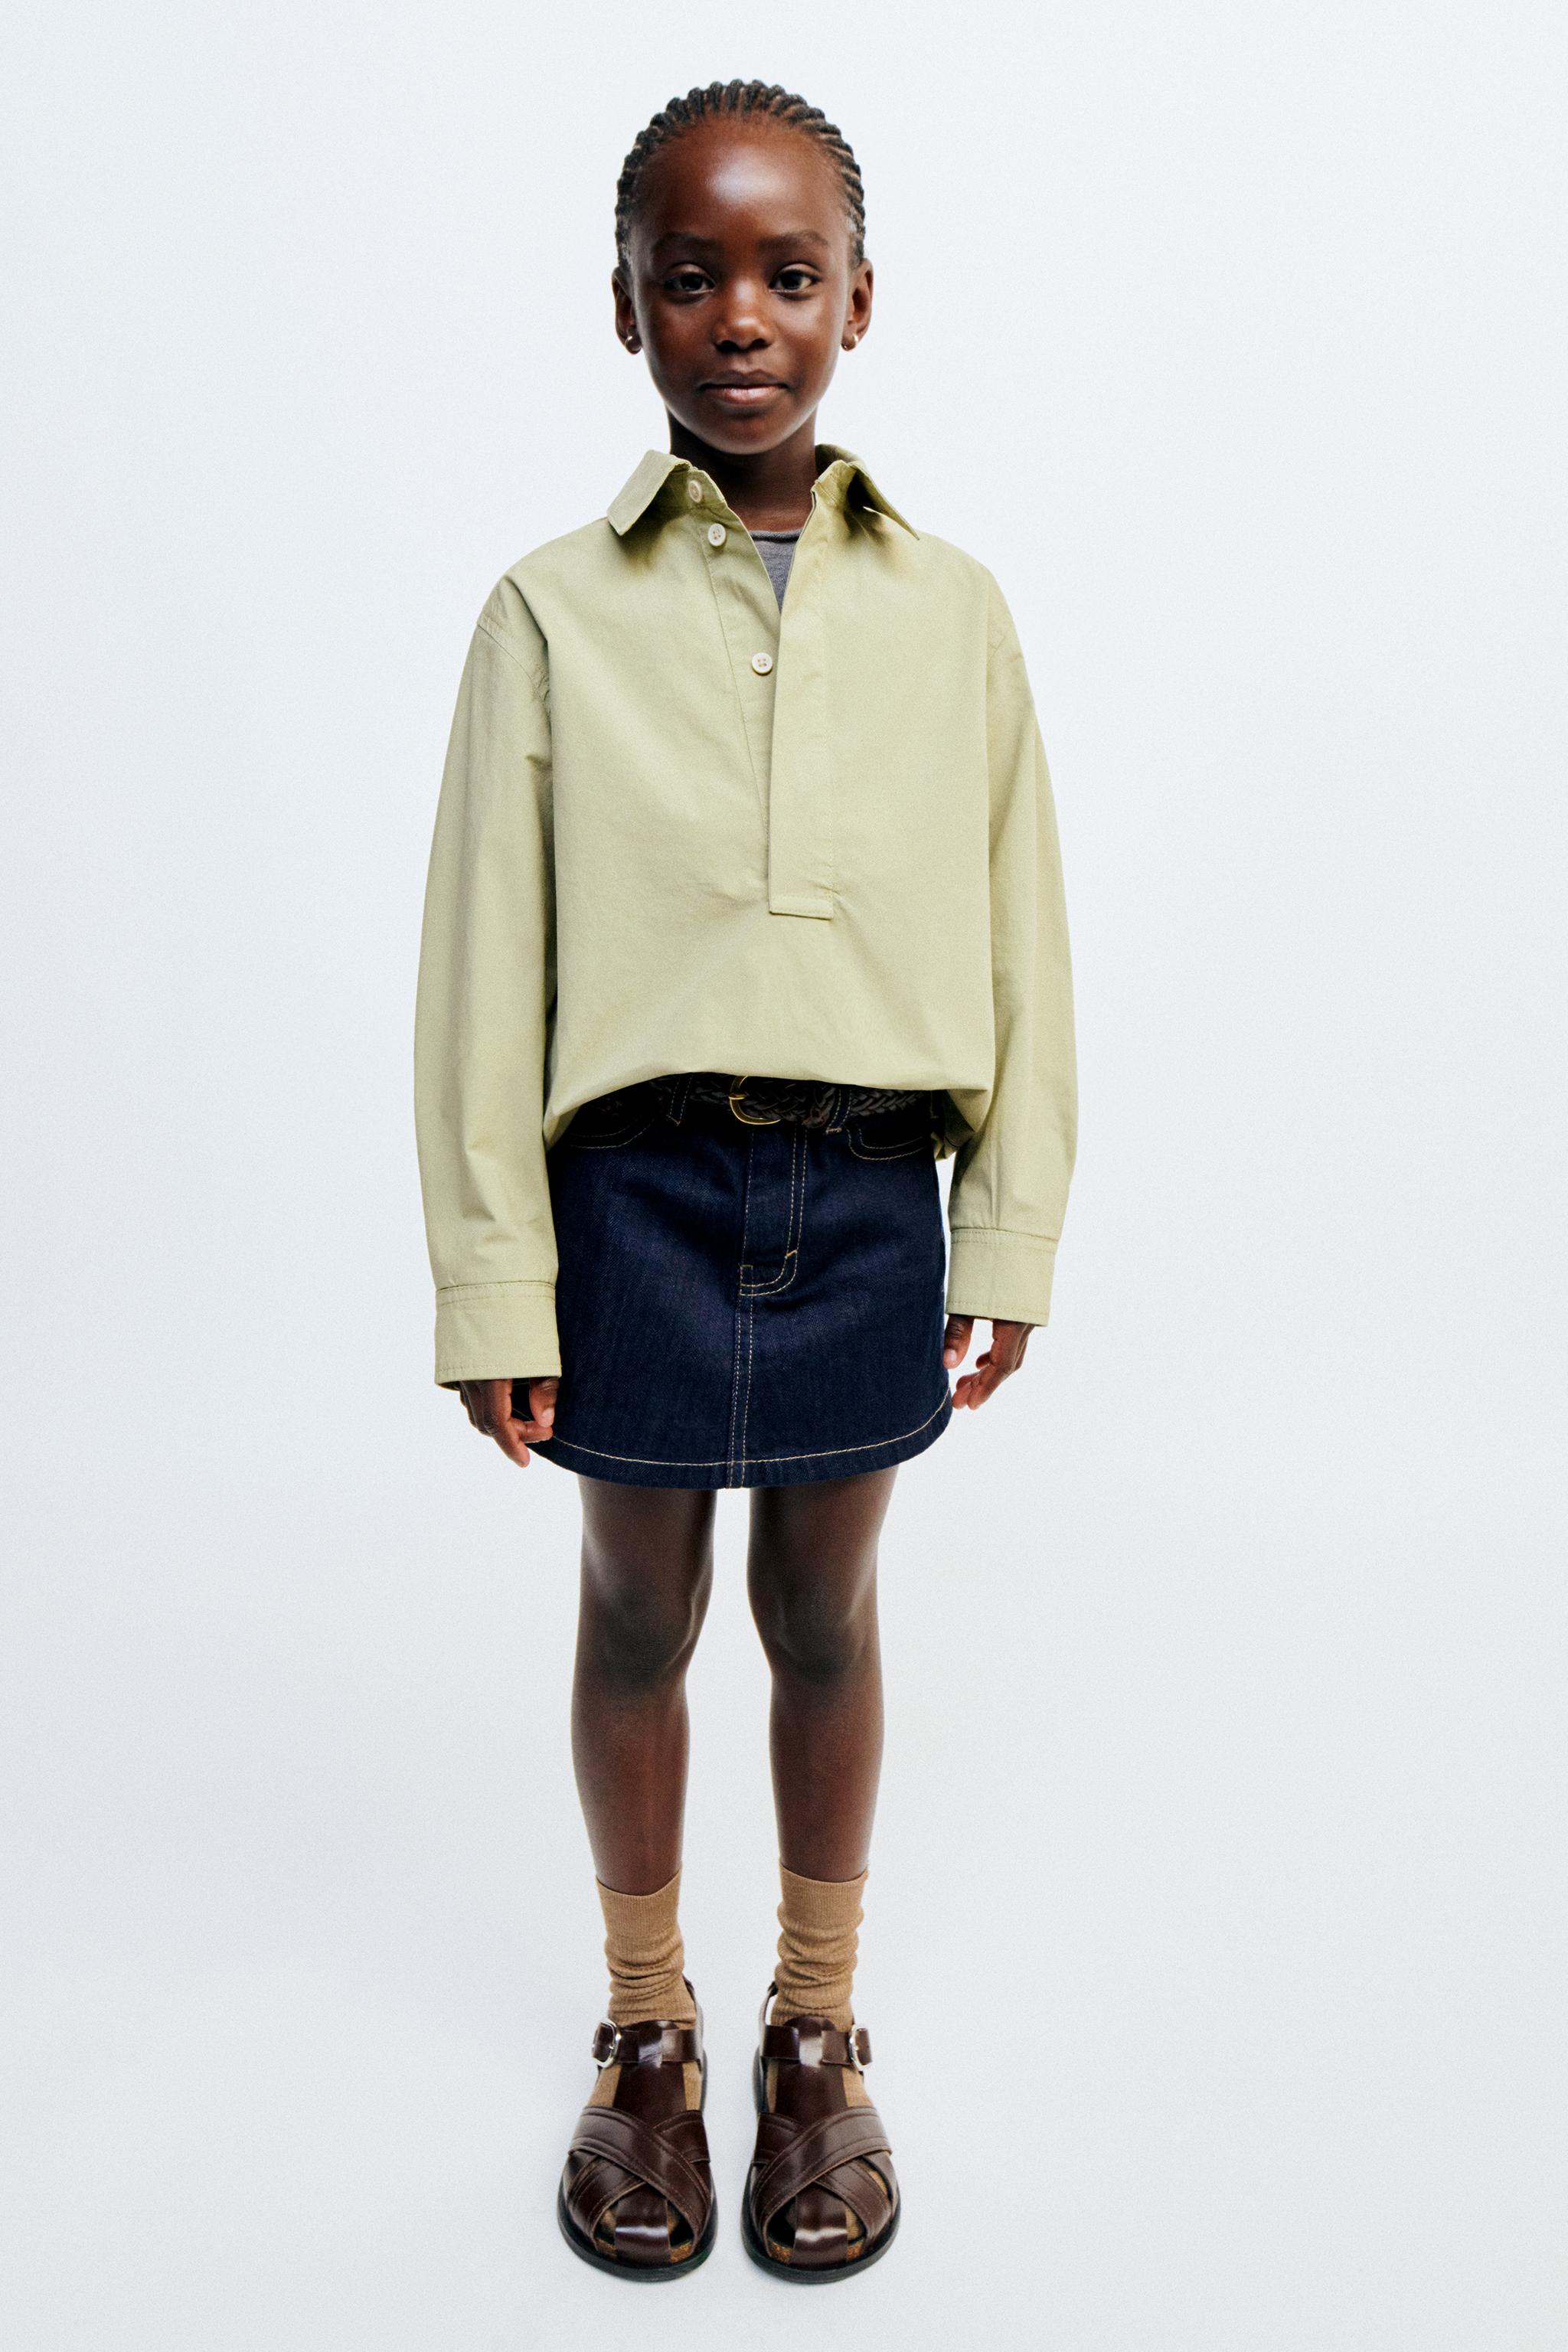 Skirts スカート | ショートパンツ 6歳 - 14歳 | ZARA 日本